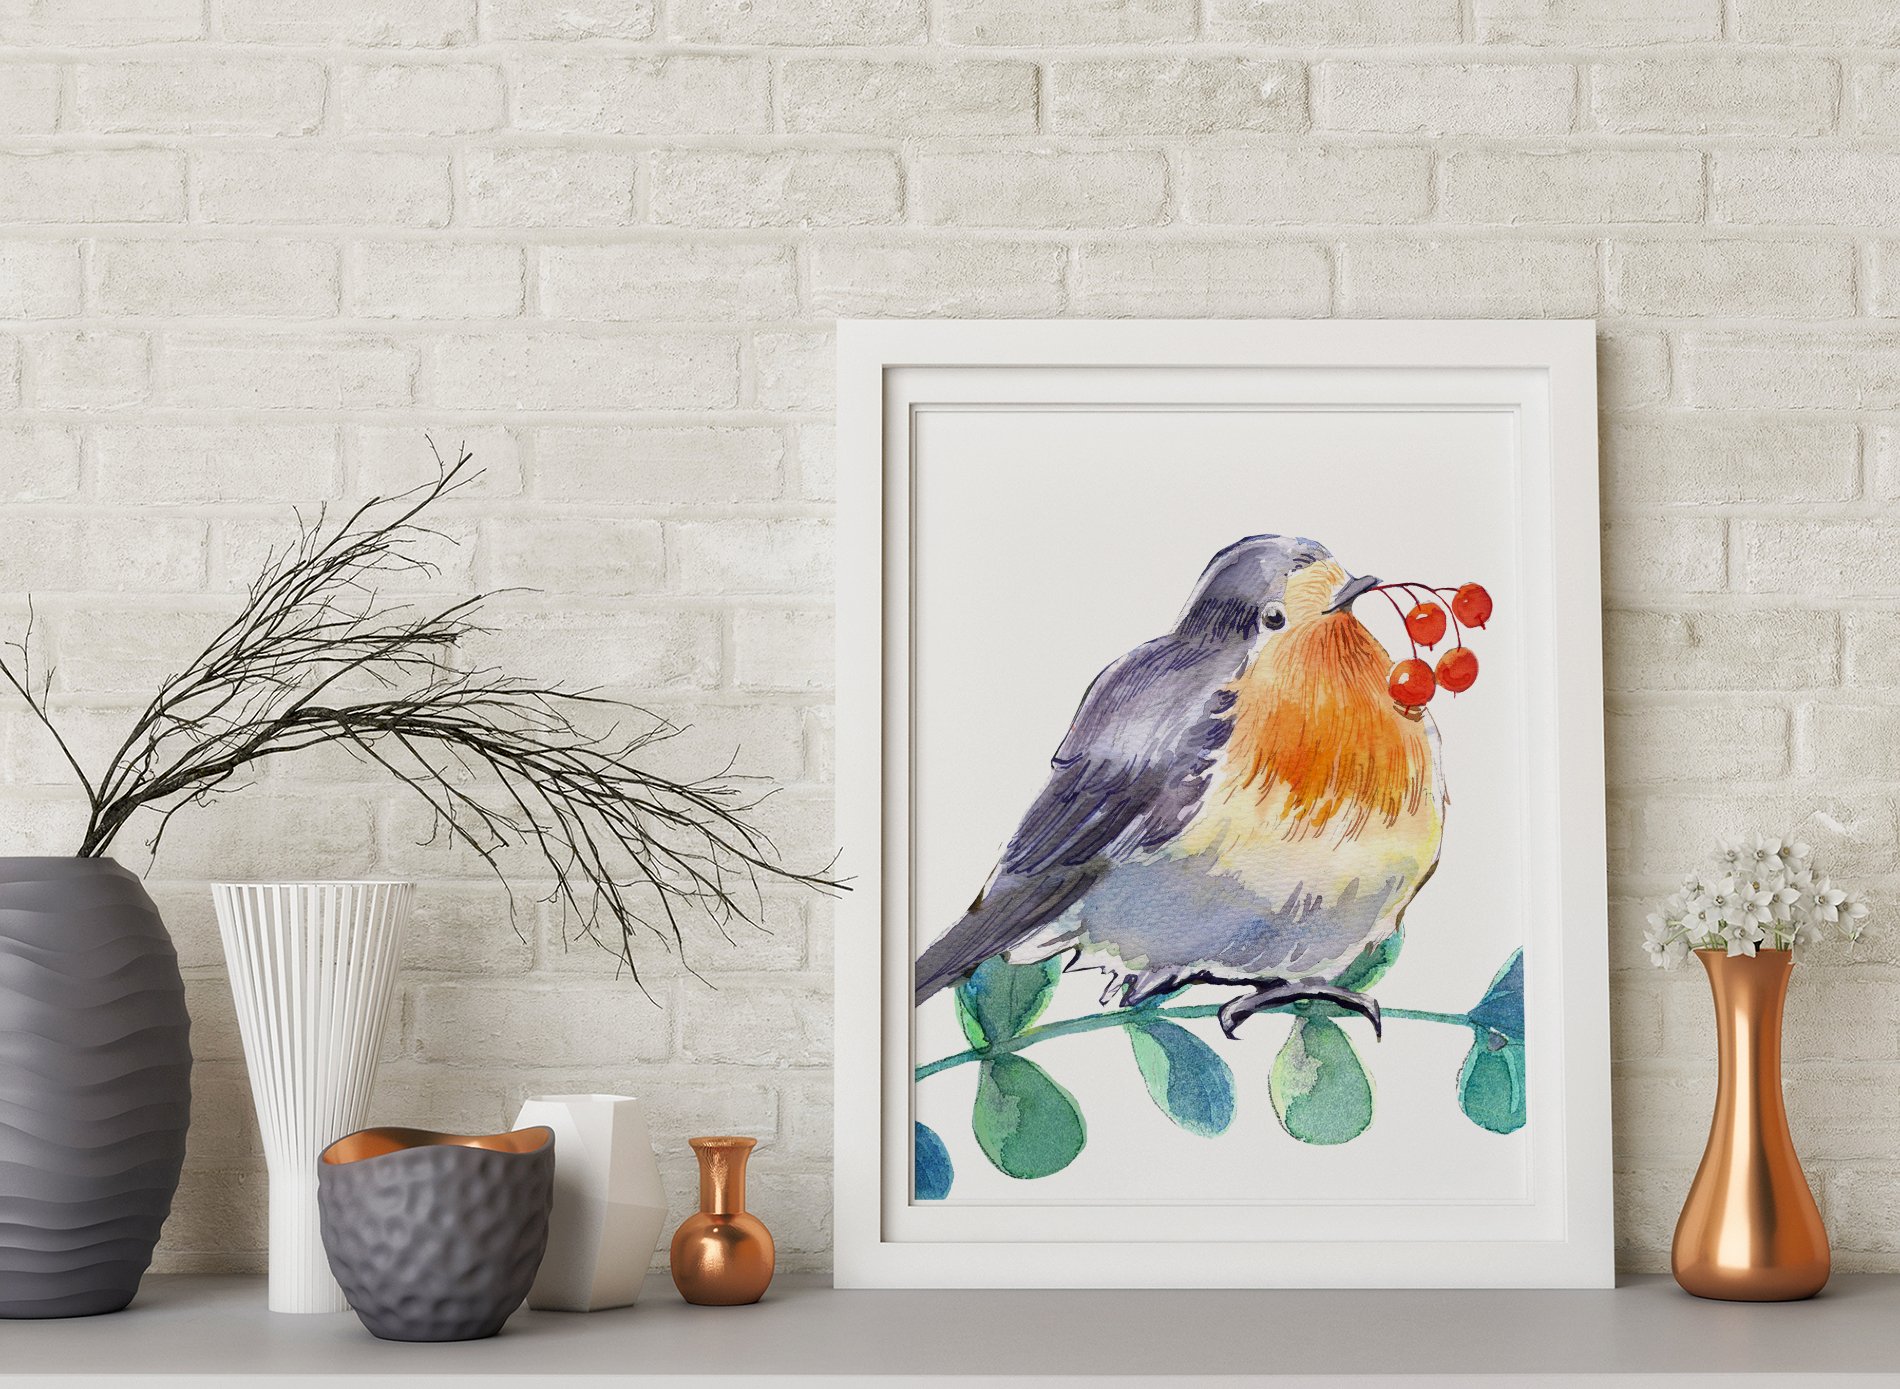 Two lovely birds poster.